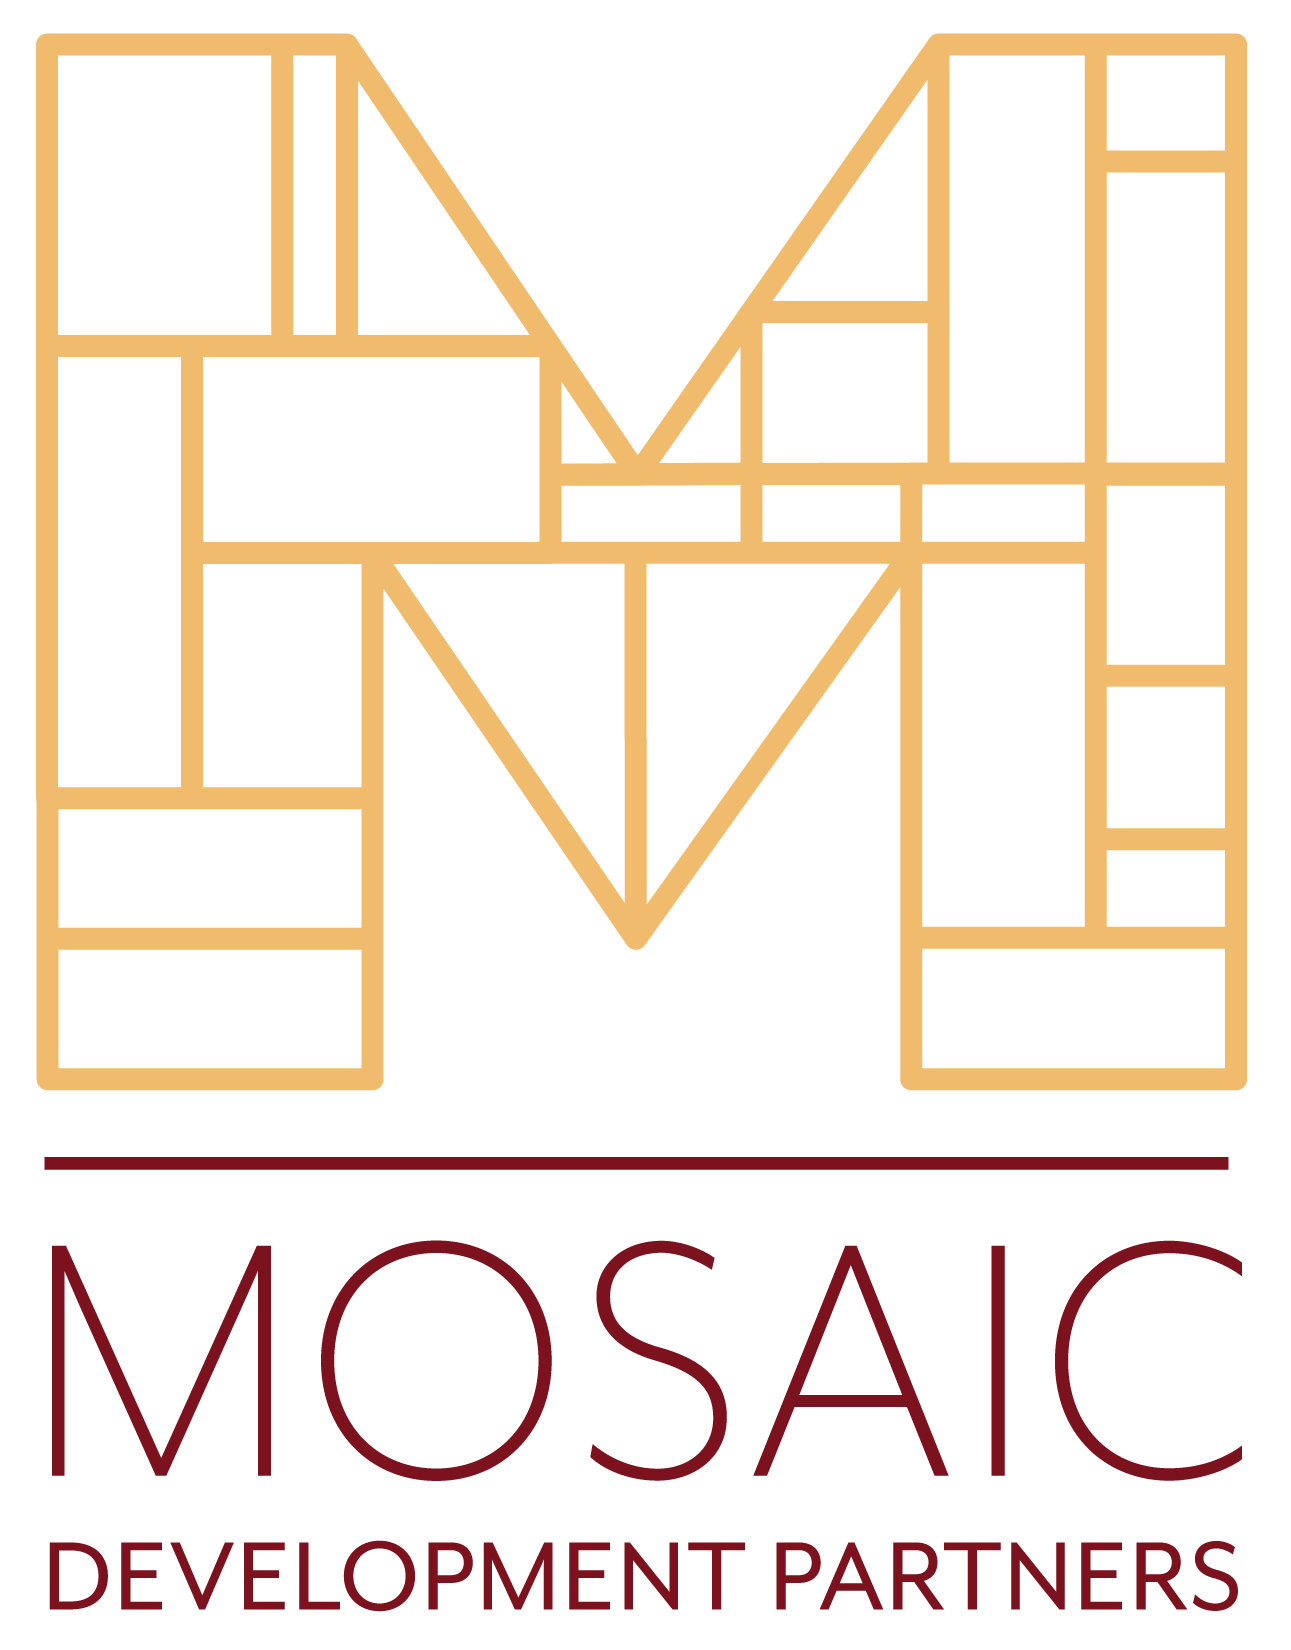 MOSAIC